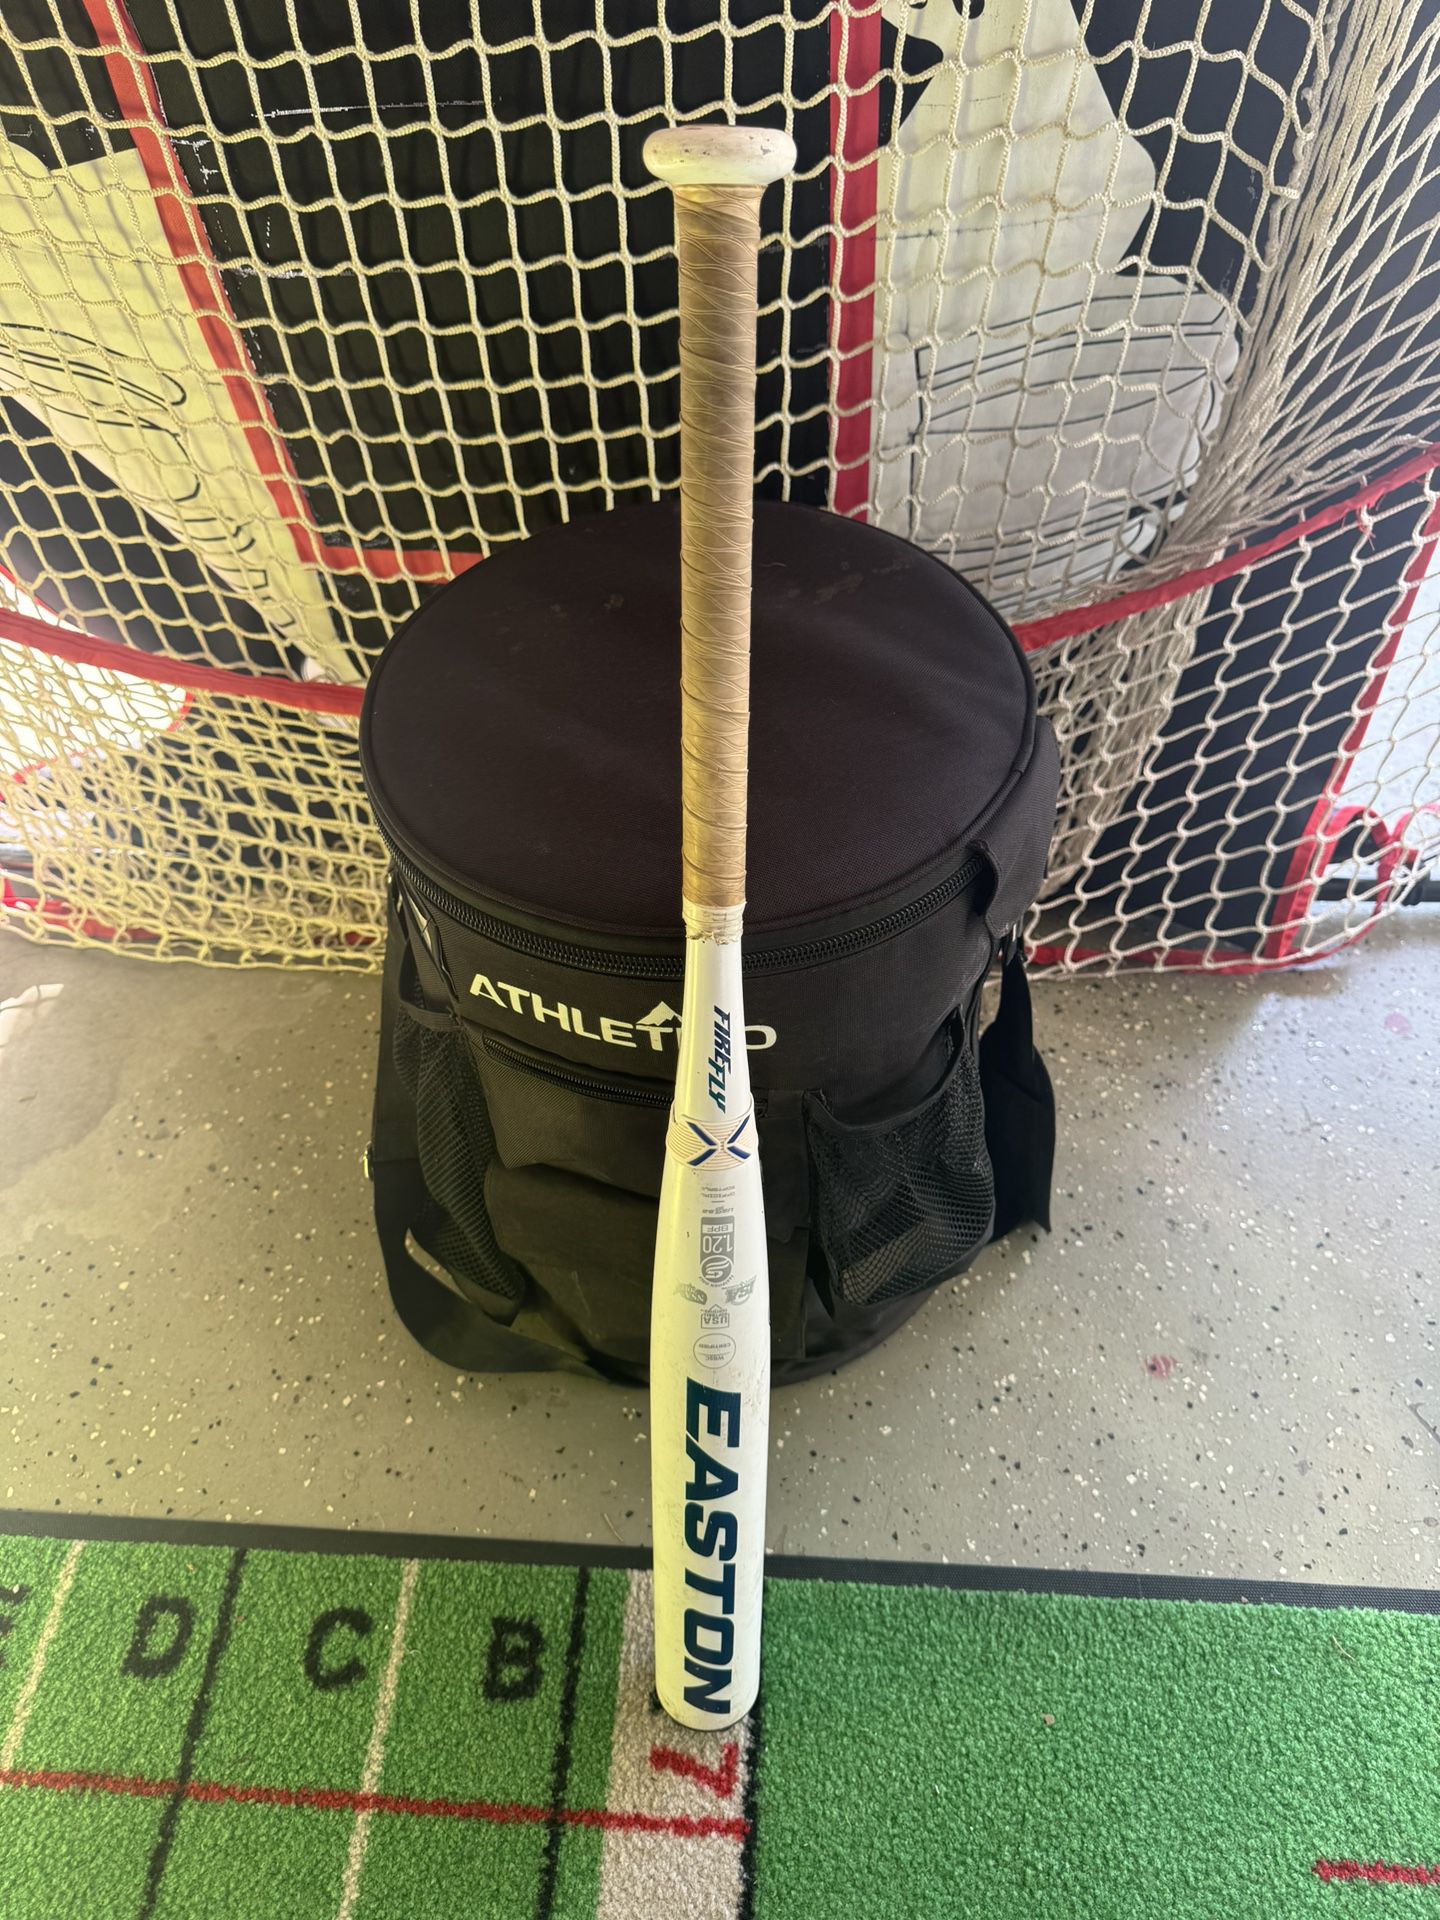 Used 29” Easton Firefly Softball Bat